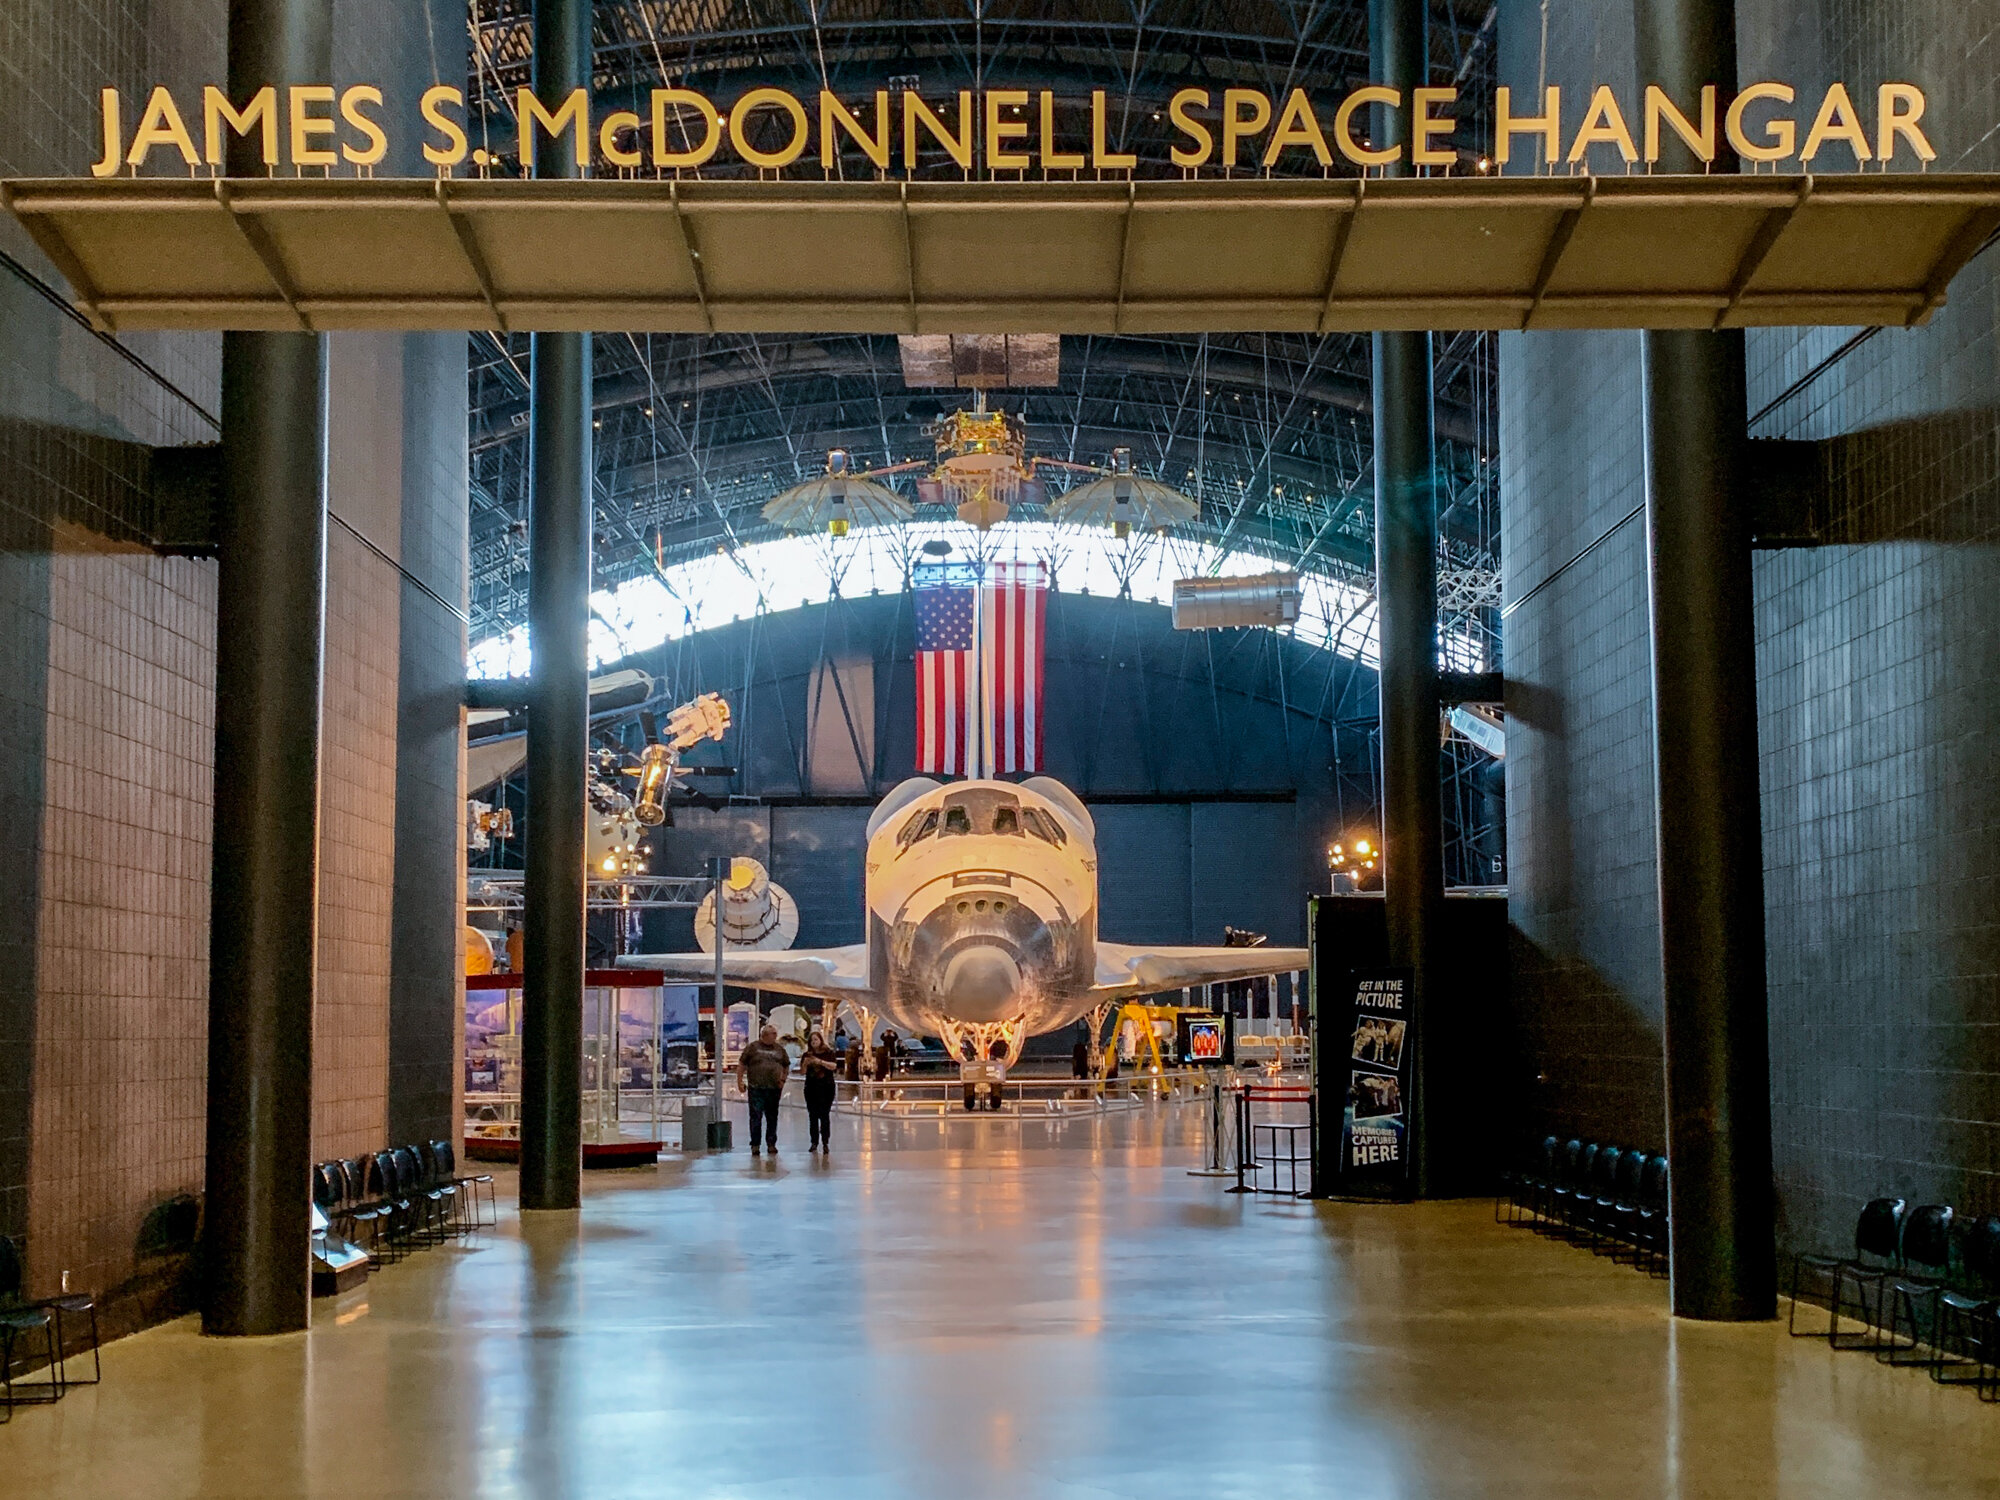 McDonnell Space Hangar